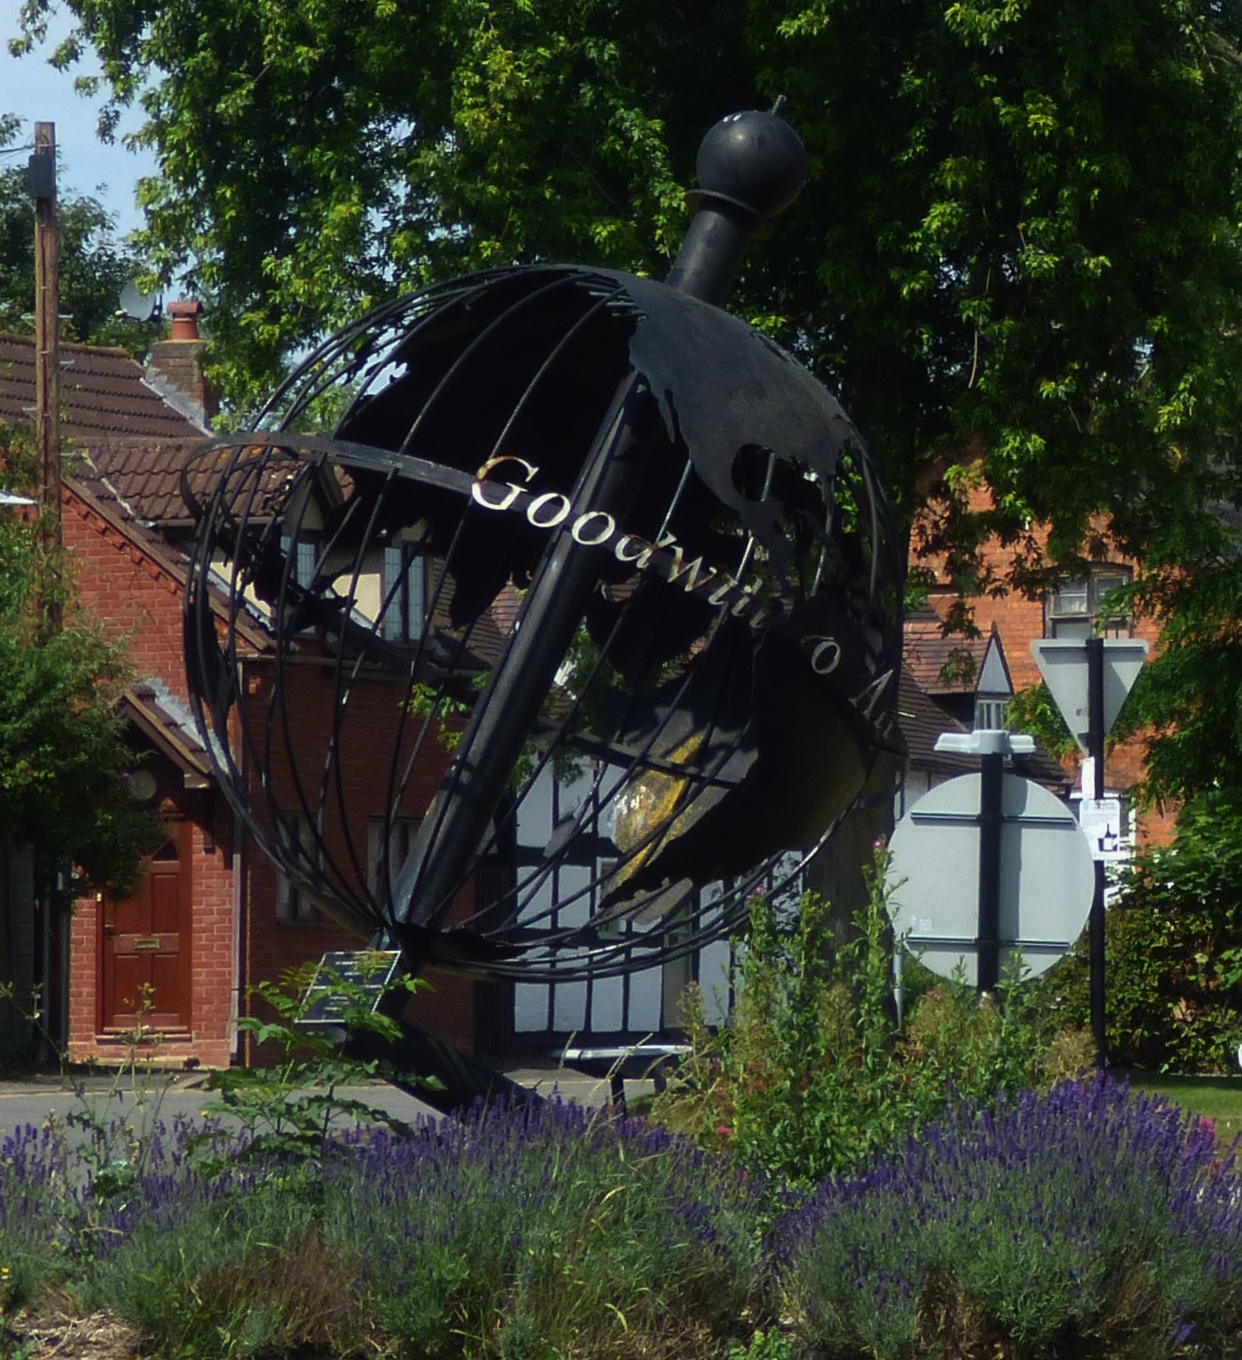 Yard globe - Wikipedia